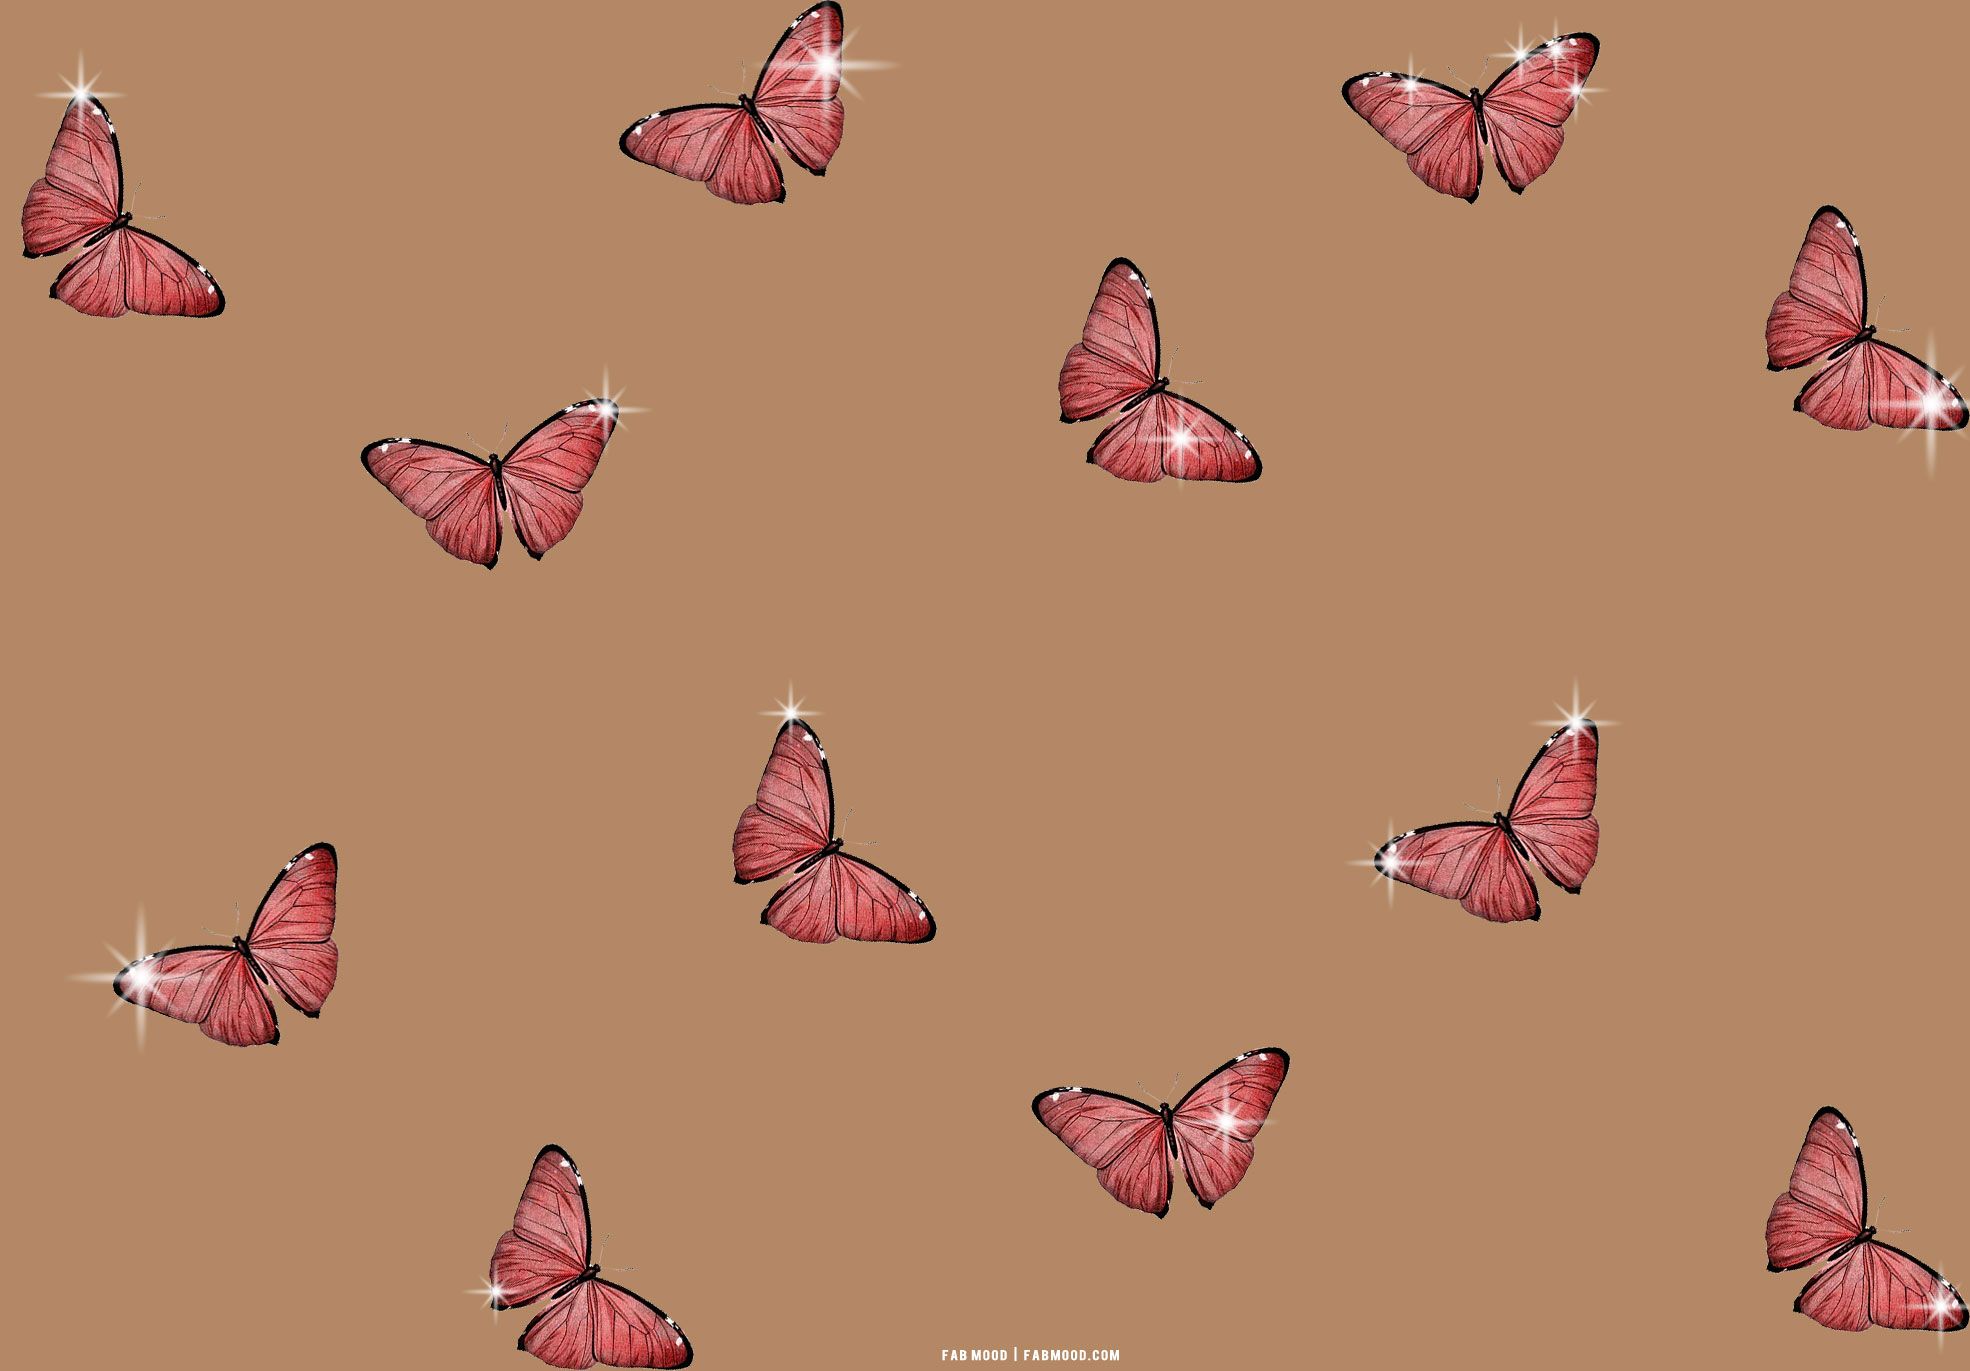  Illustration Hintergrundbild 1970x1371. Brown Aesthetic Wallpaper for Laptop : Sparkle Butterfly Aesthetic Background